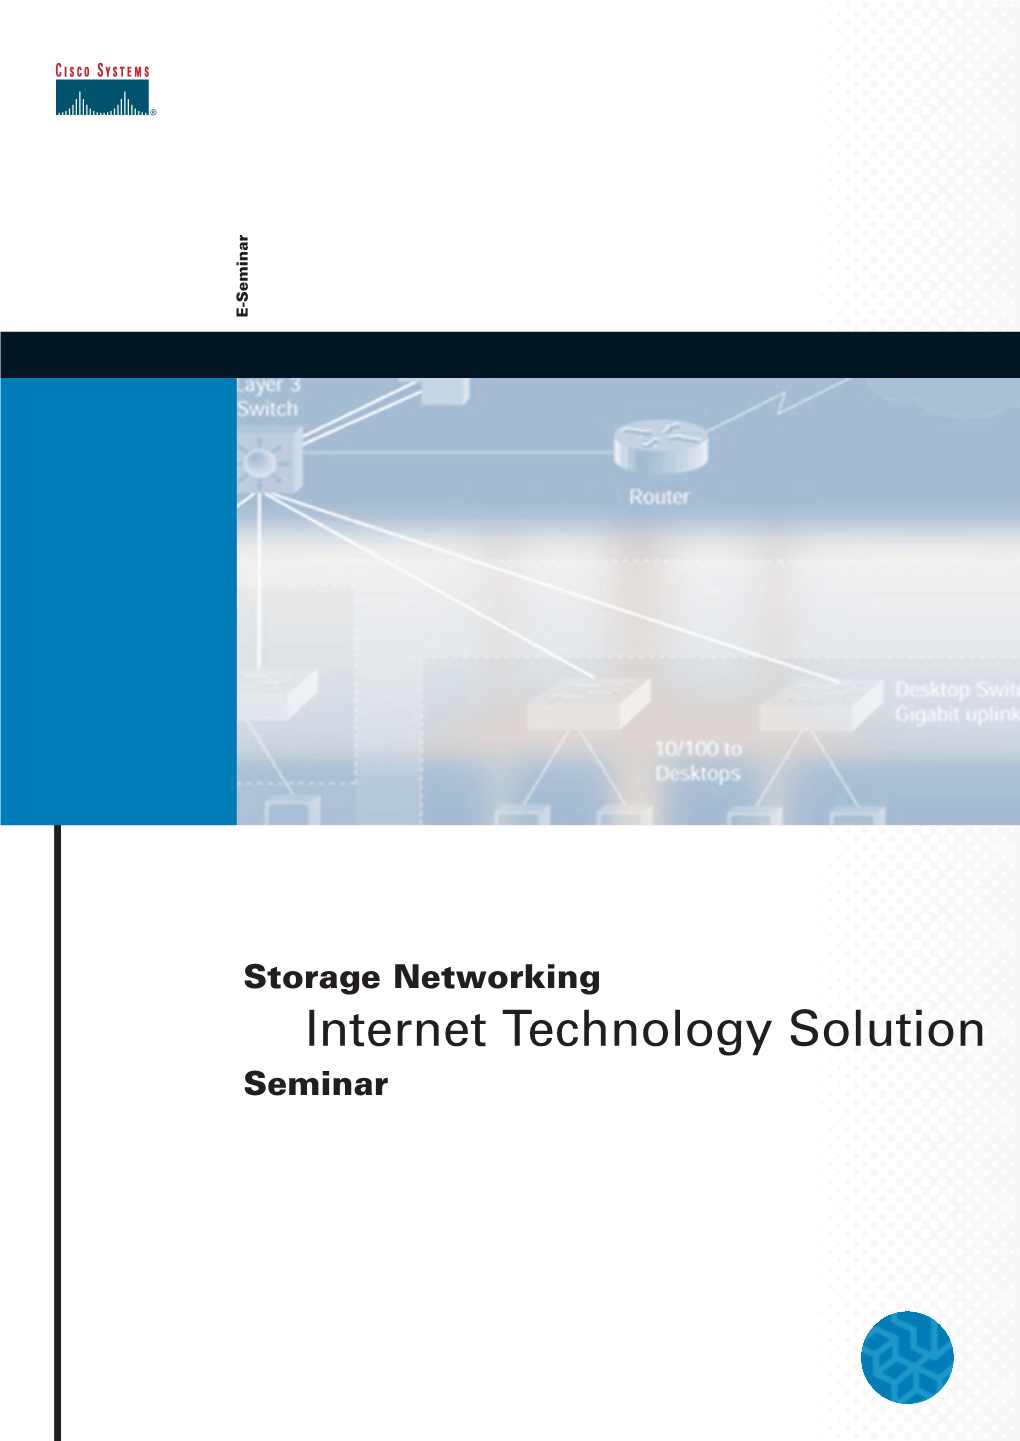 Internet Technology Solution Storage Networking Internet Technology Solution Seminar